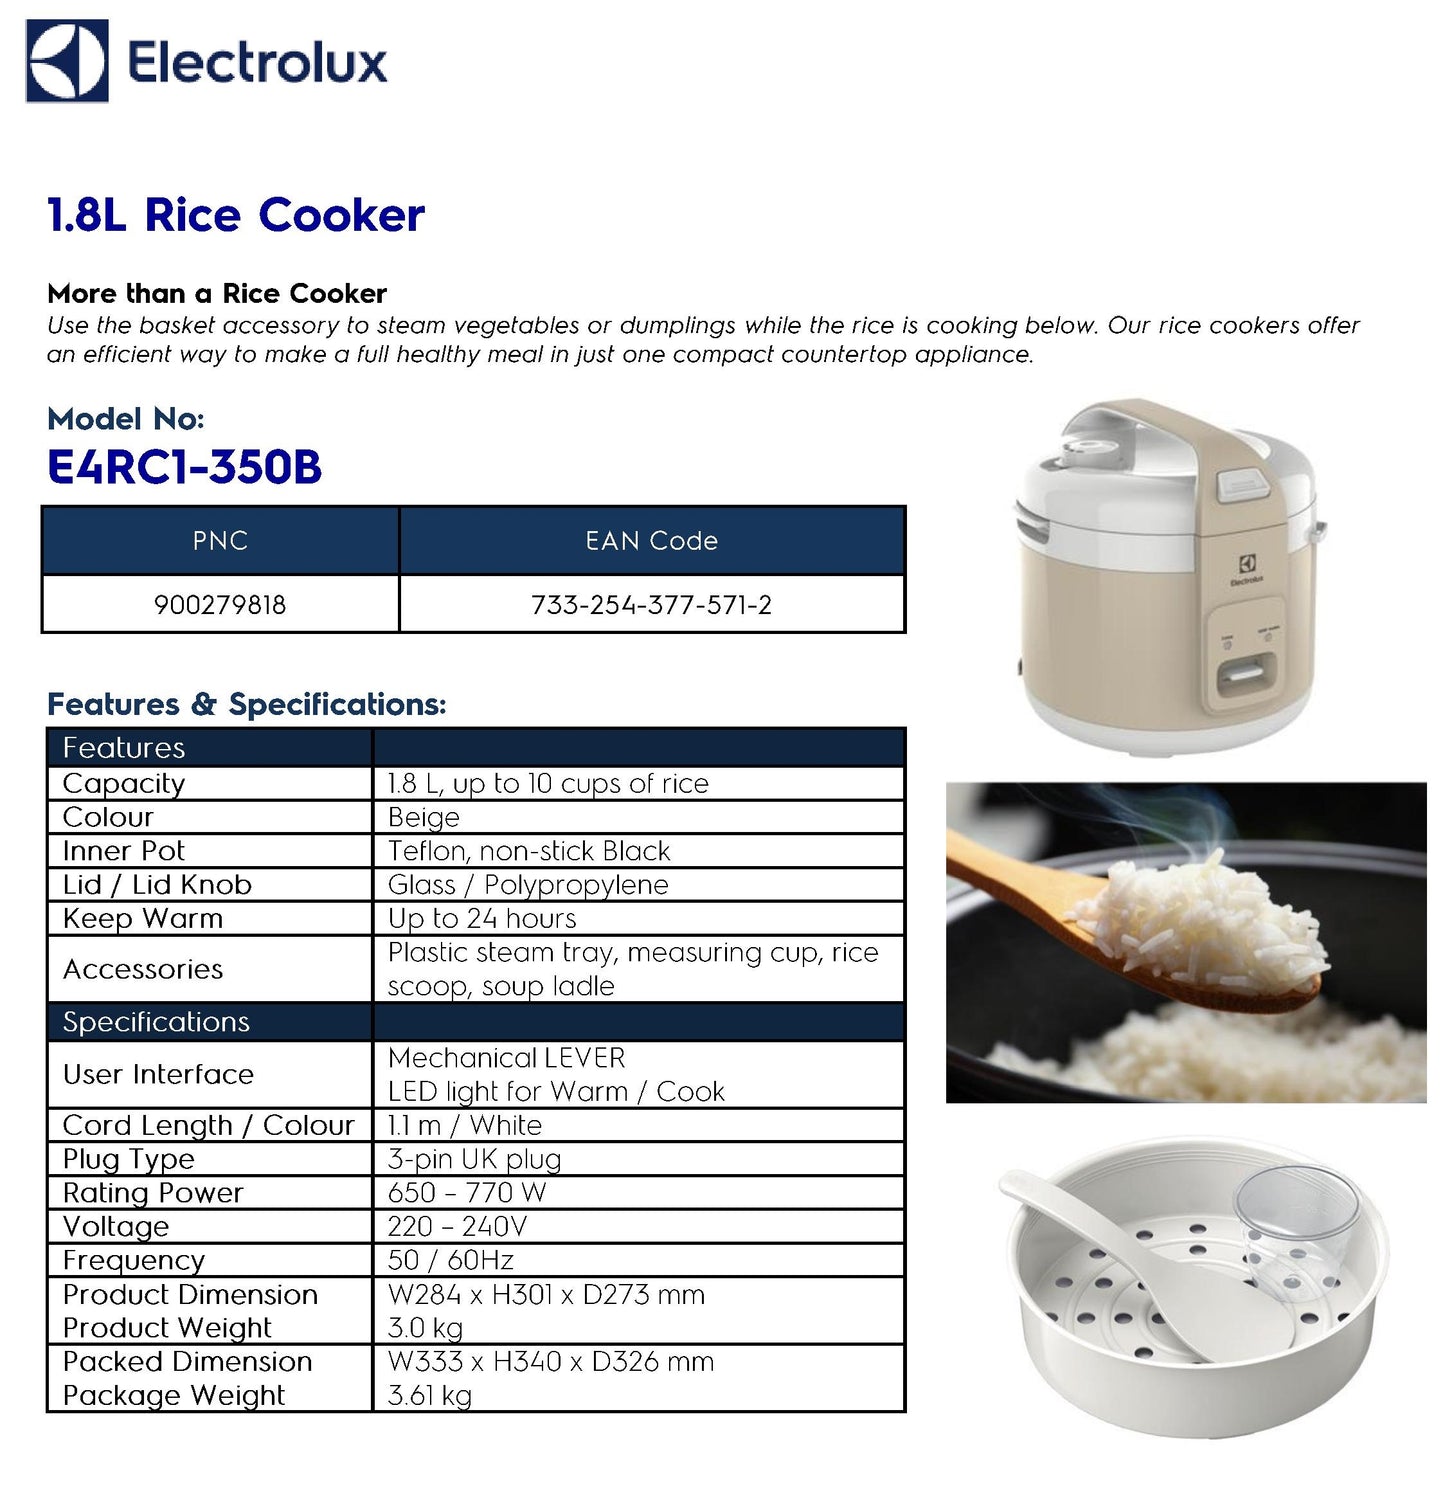 Electrolux E4RC1-350B Rice Cooker 1.8L